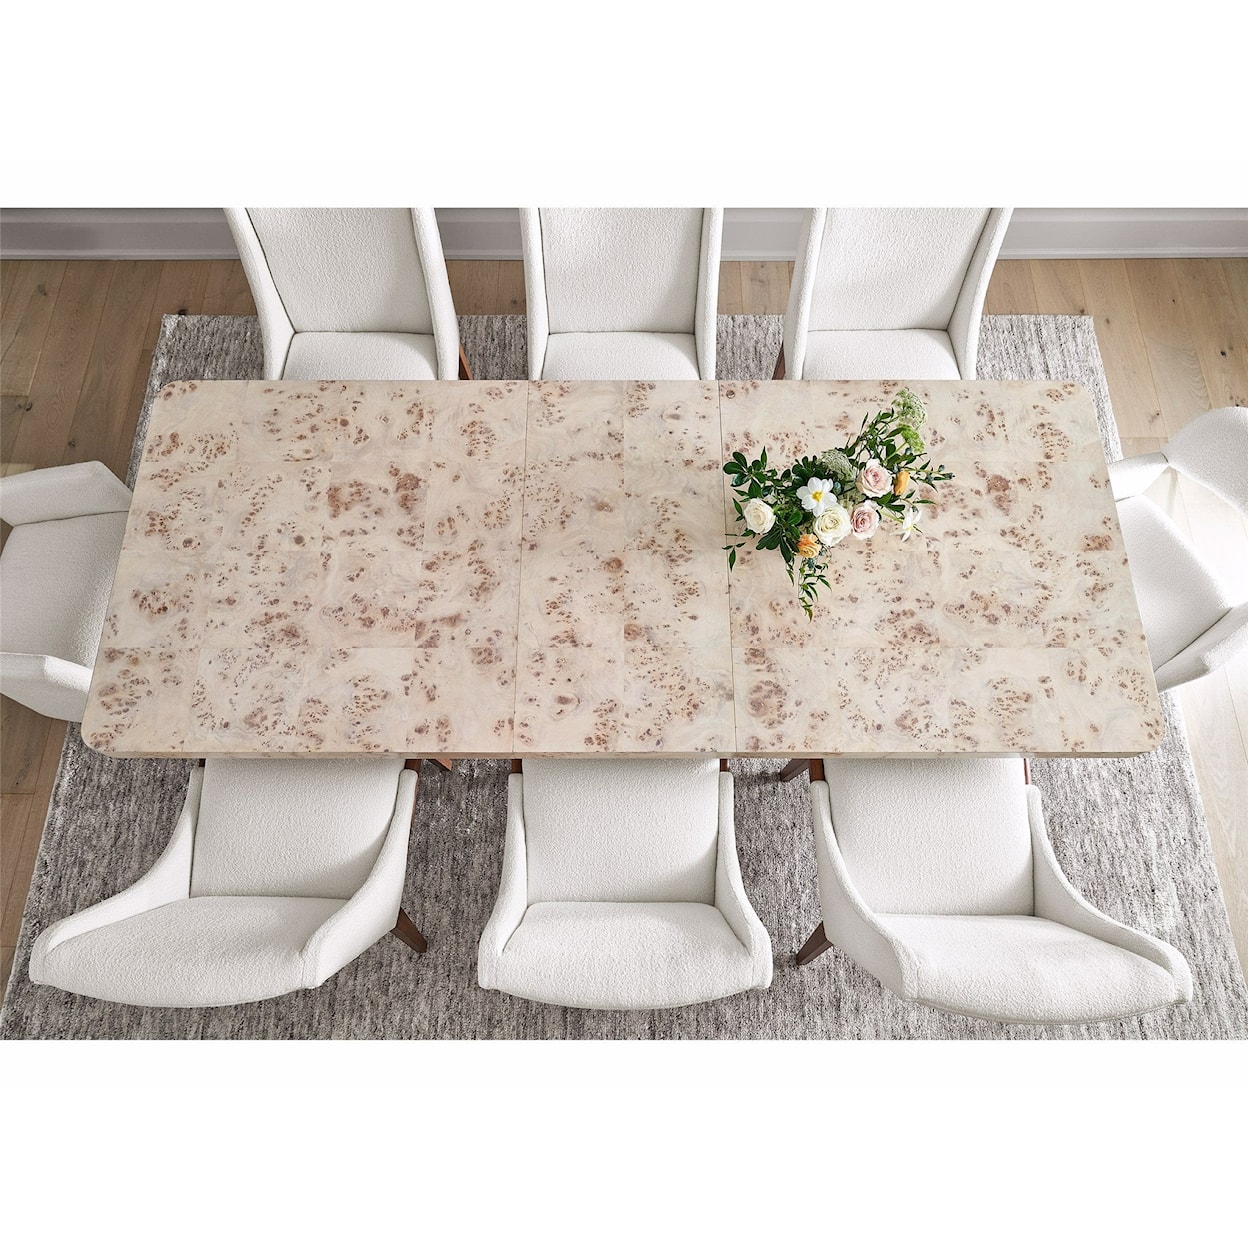 Universal Tranquility - Miranda Kerr Home Dining Chair